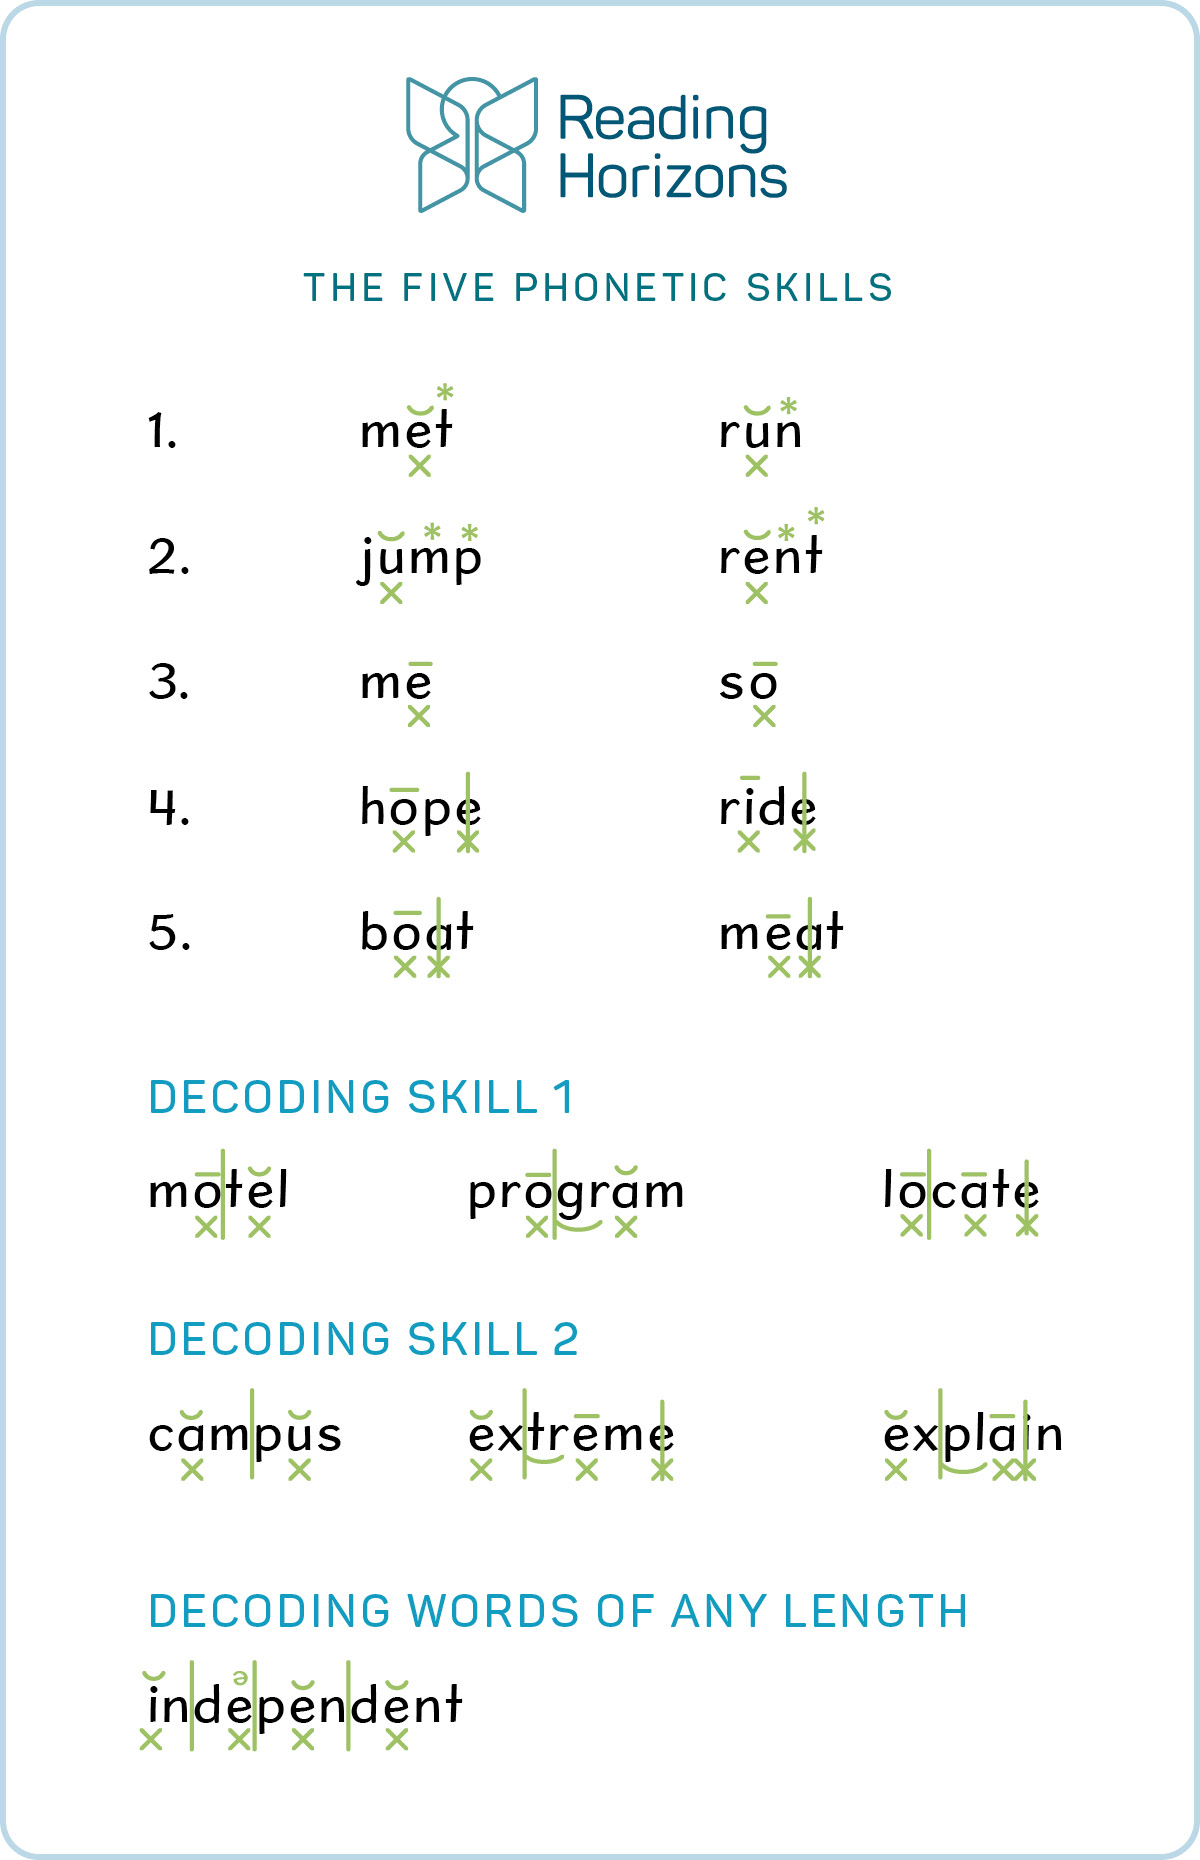 Reading Horizons Discovery 5 Phonetic Skills Decoding Sample